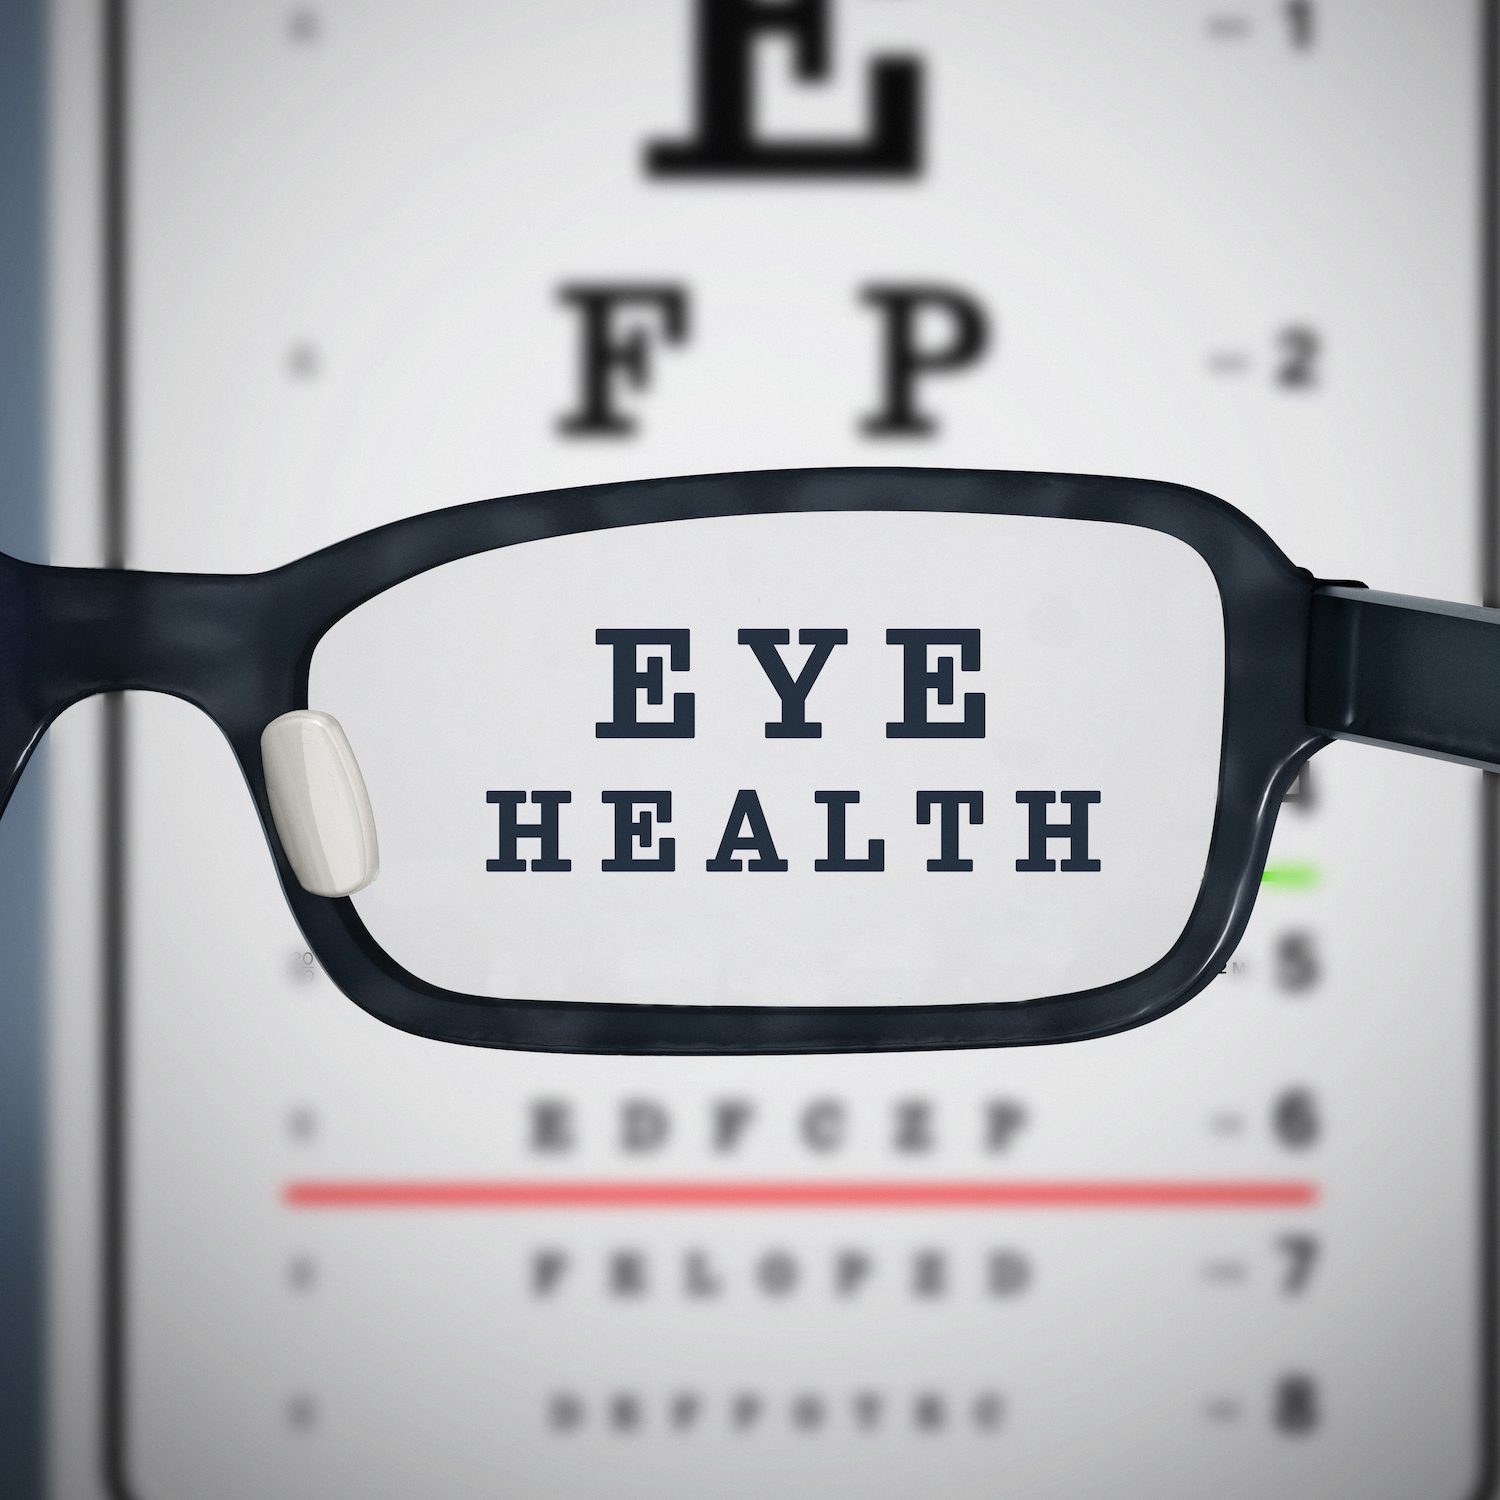 Eye test chart and eyeglasses. 3D illustration.